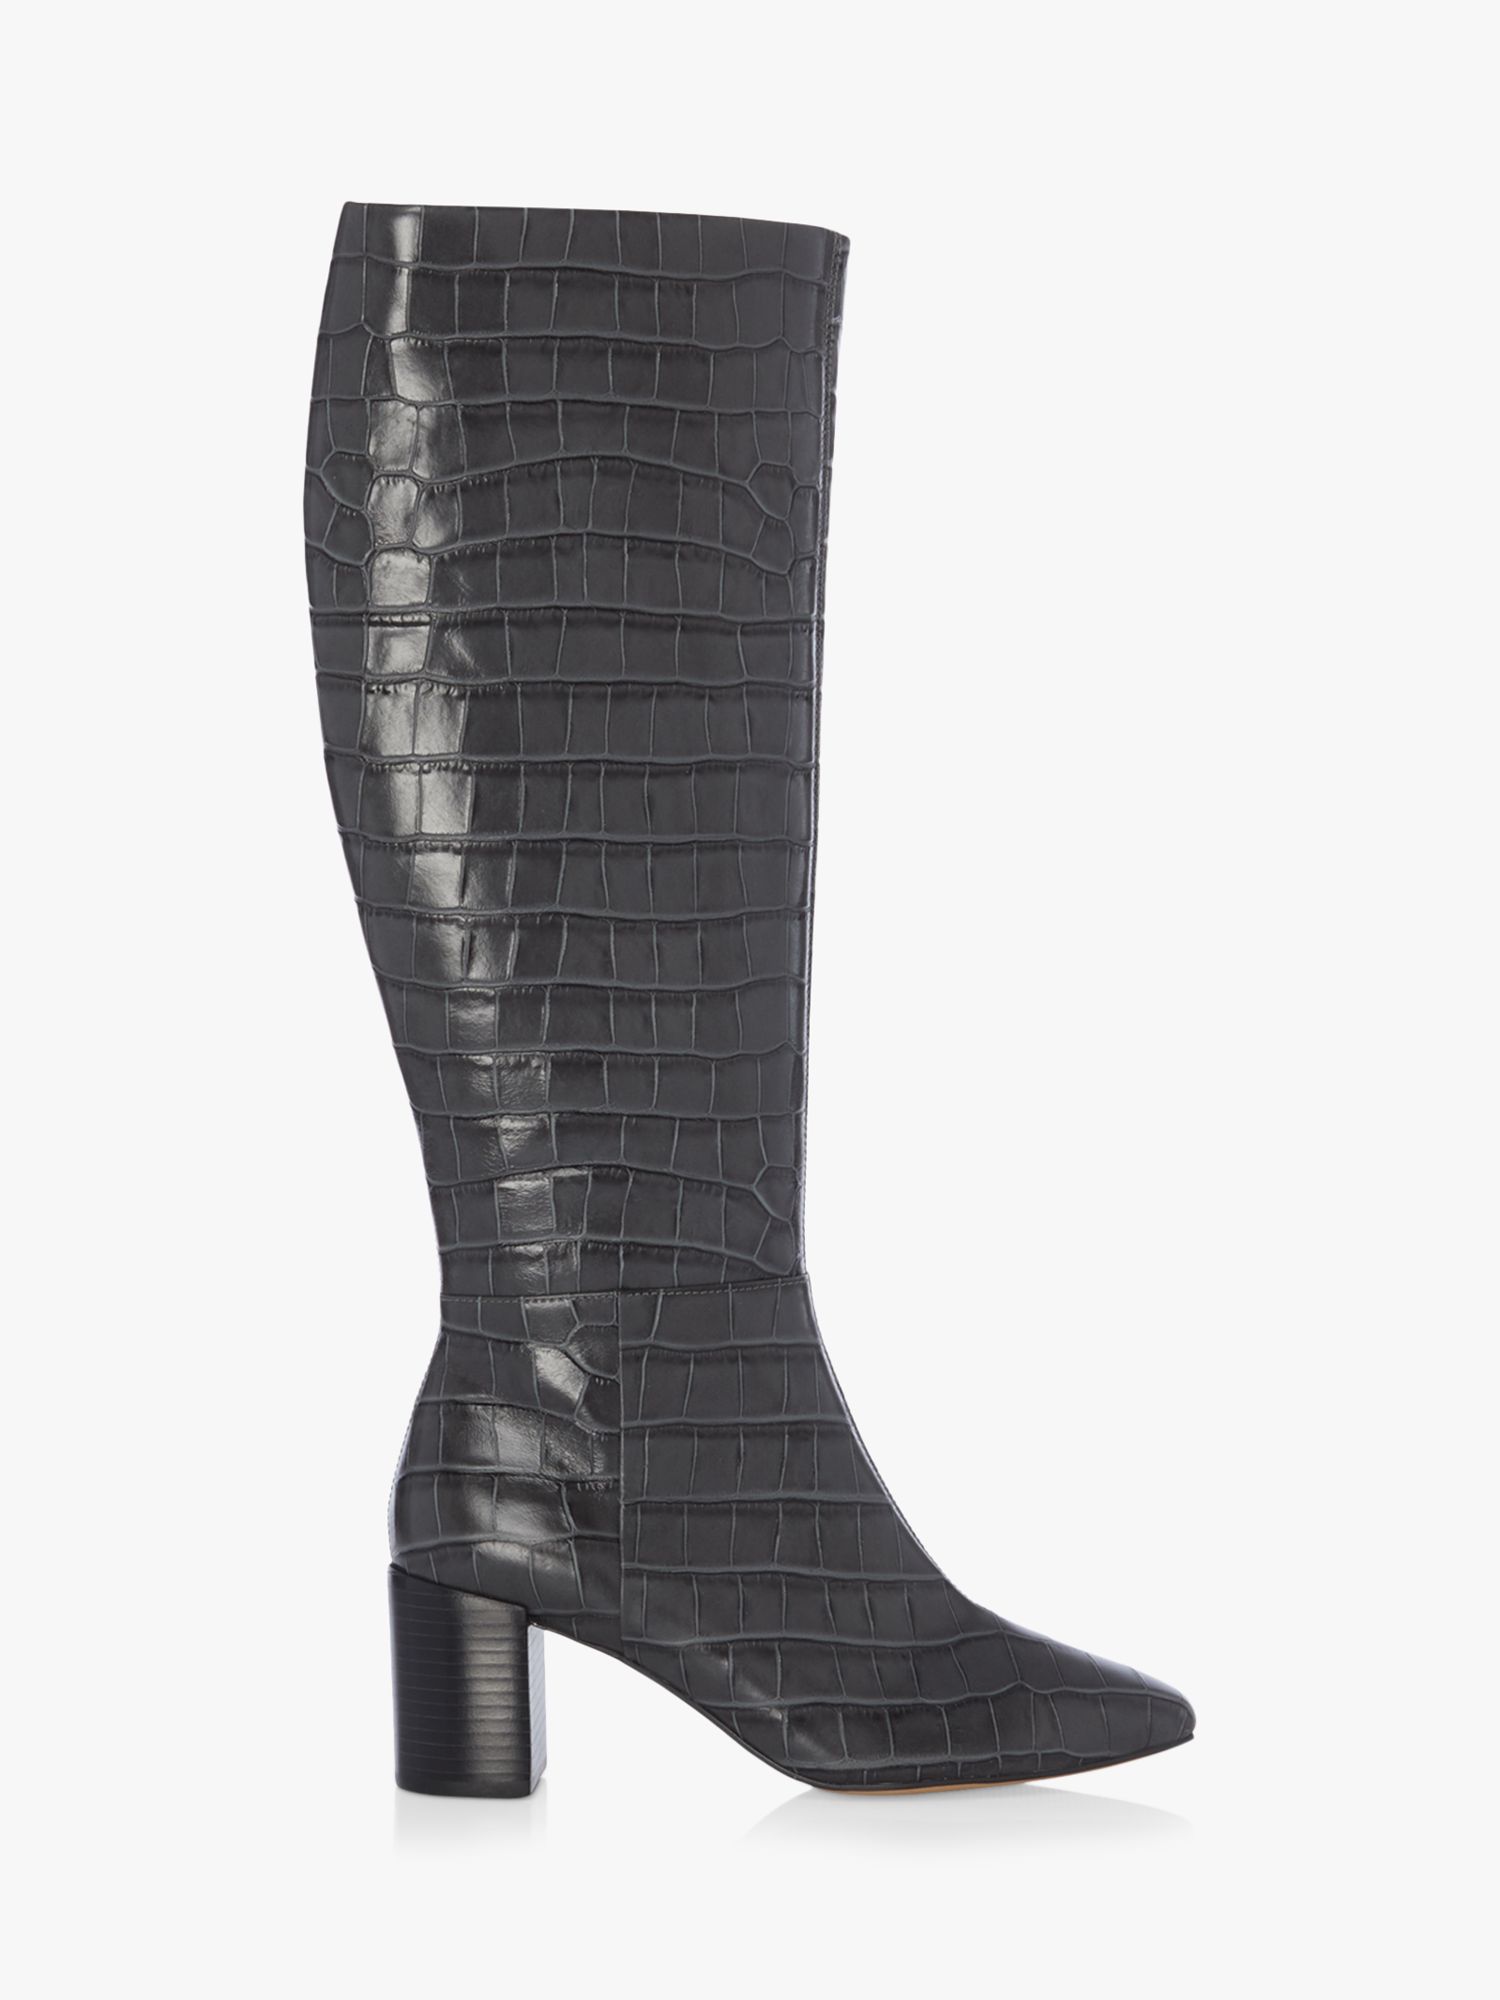 Dune Saffia Leather Croc Print Knee High Boots, Grey